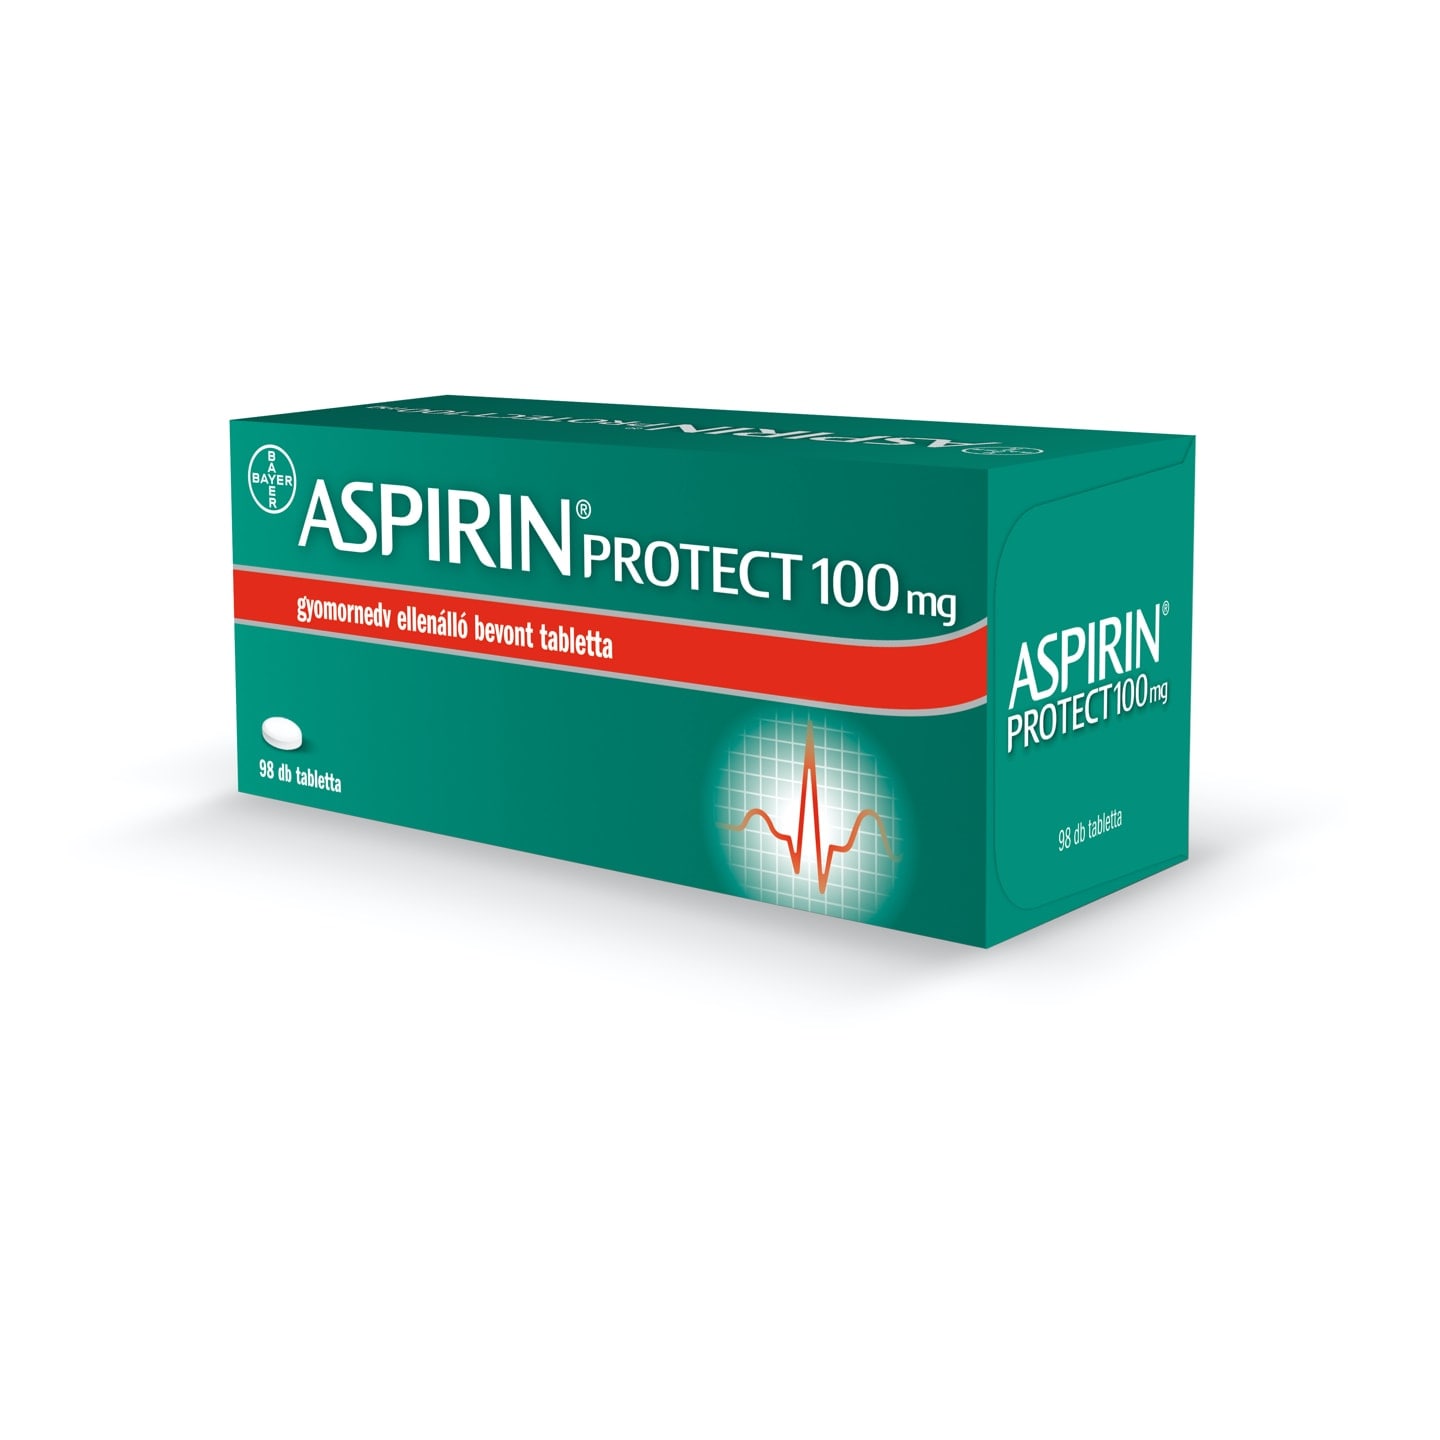 Aspirin Protect mg gyomornedv-ellenálló bevont tabletta - 28 db